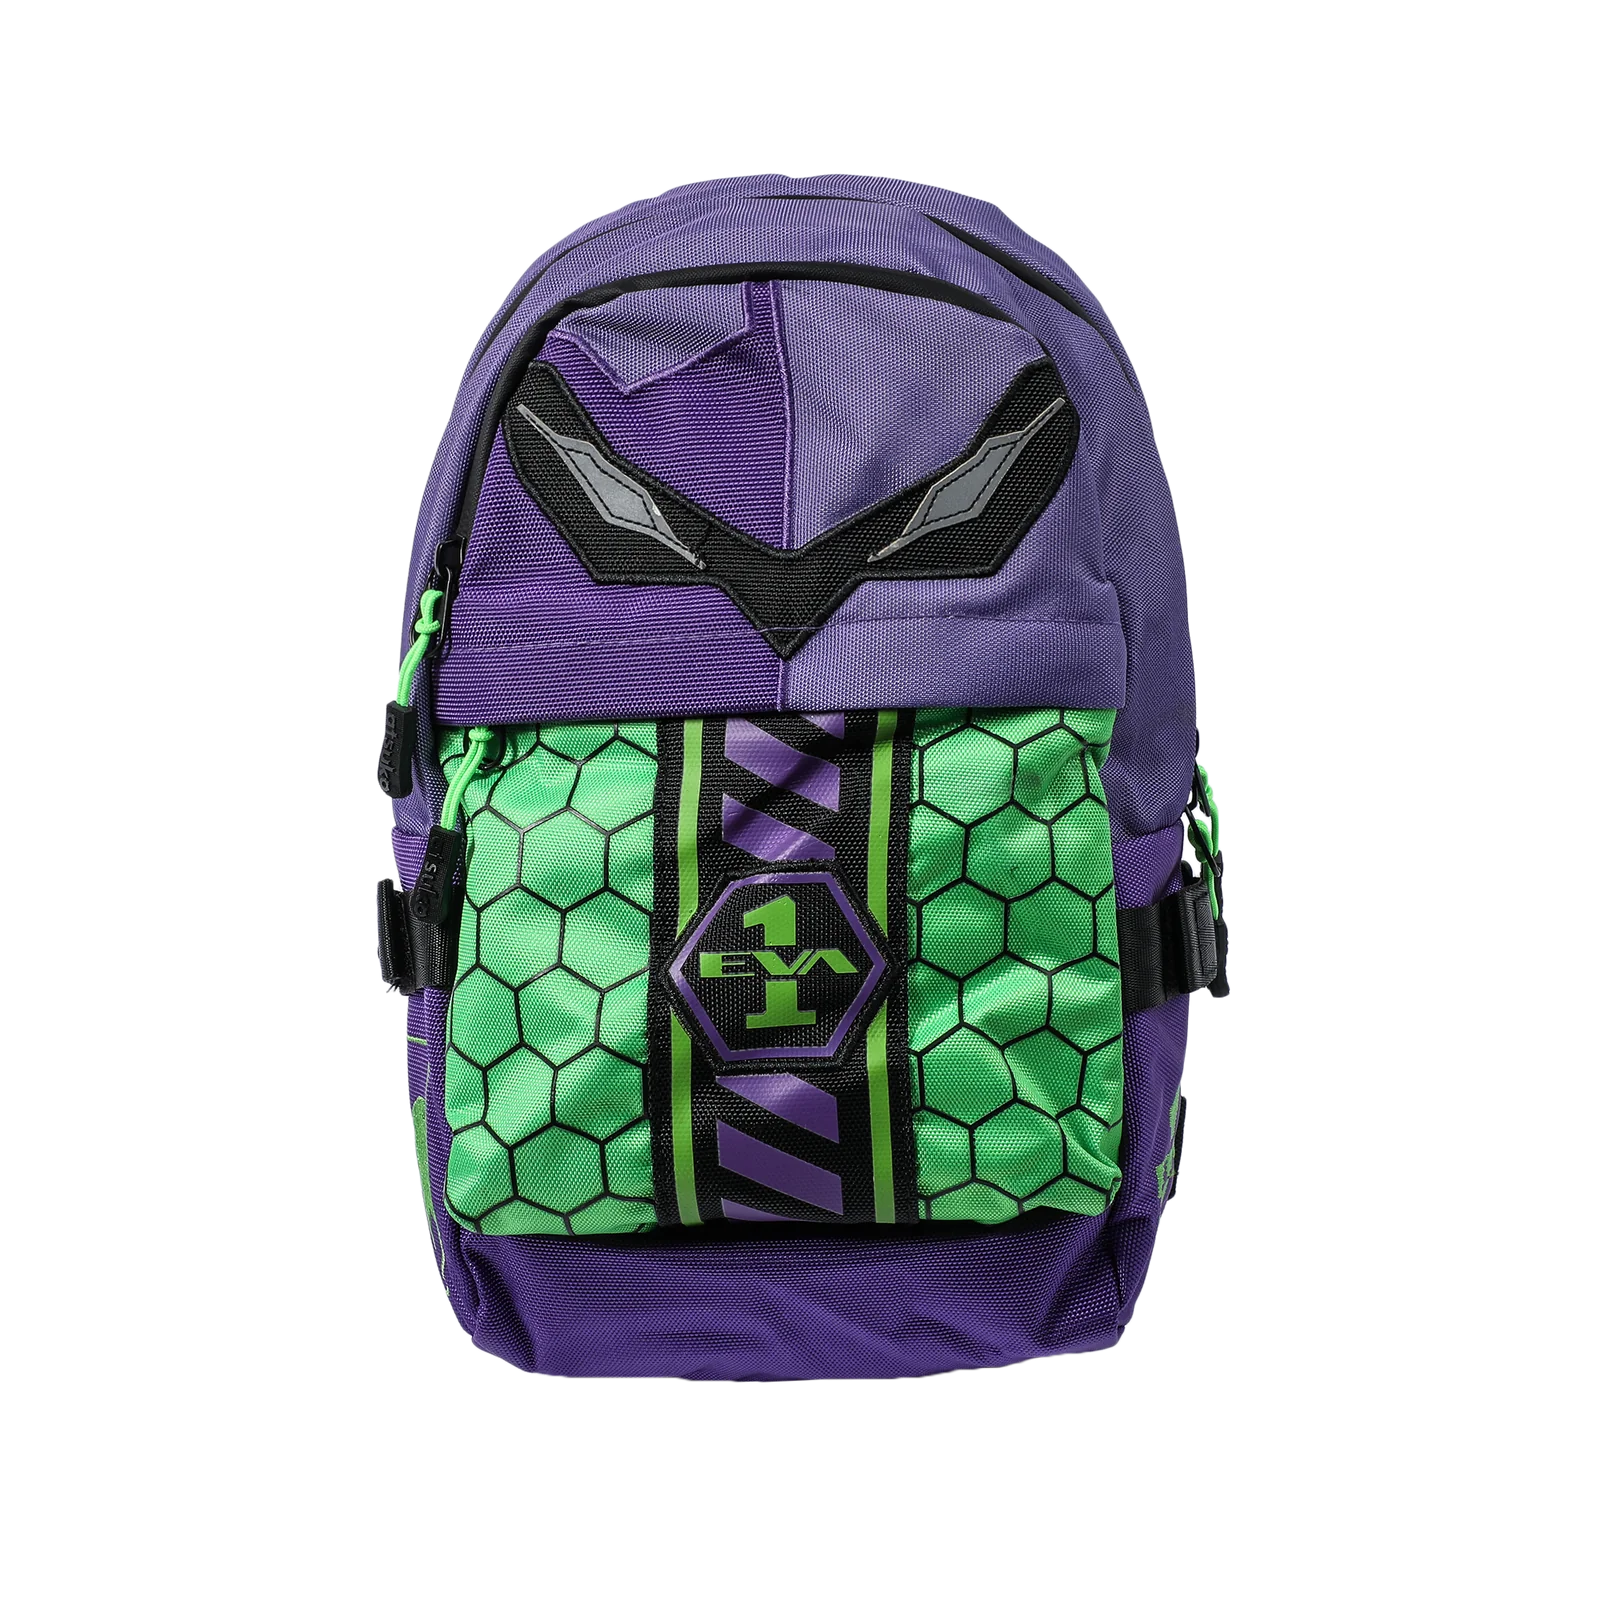 Evangelion EVA Unit-01 Sling Bag Purple Green Zipper Front pocket 